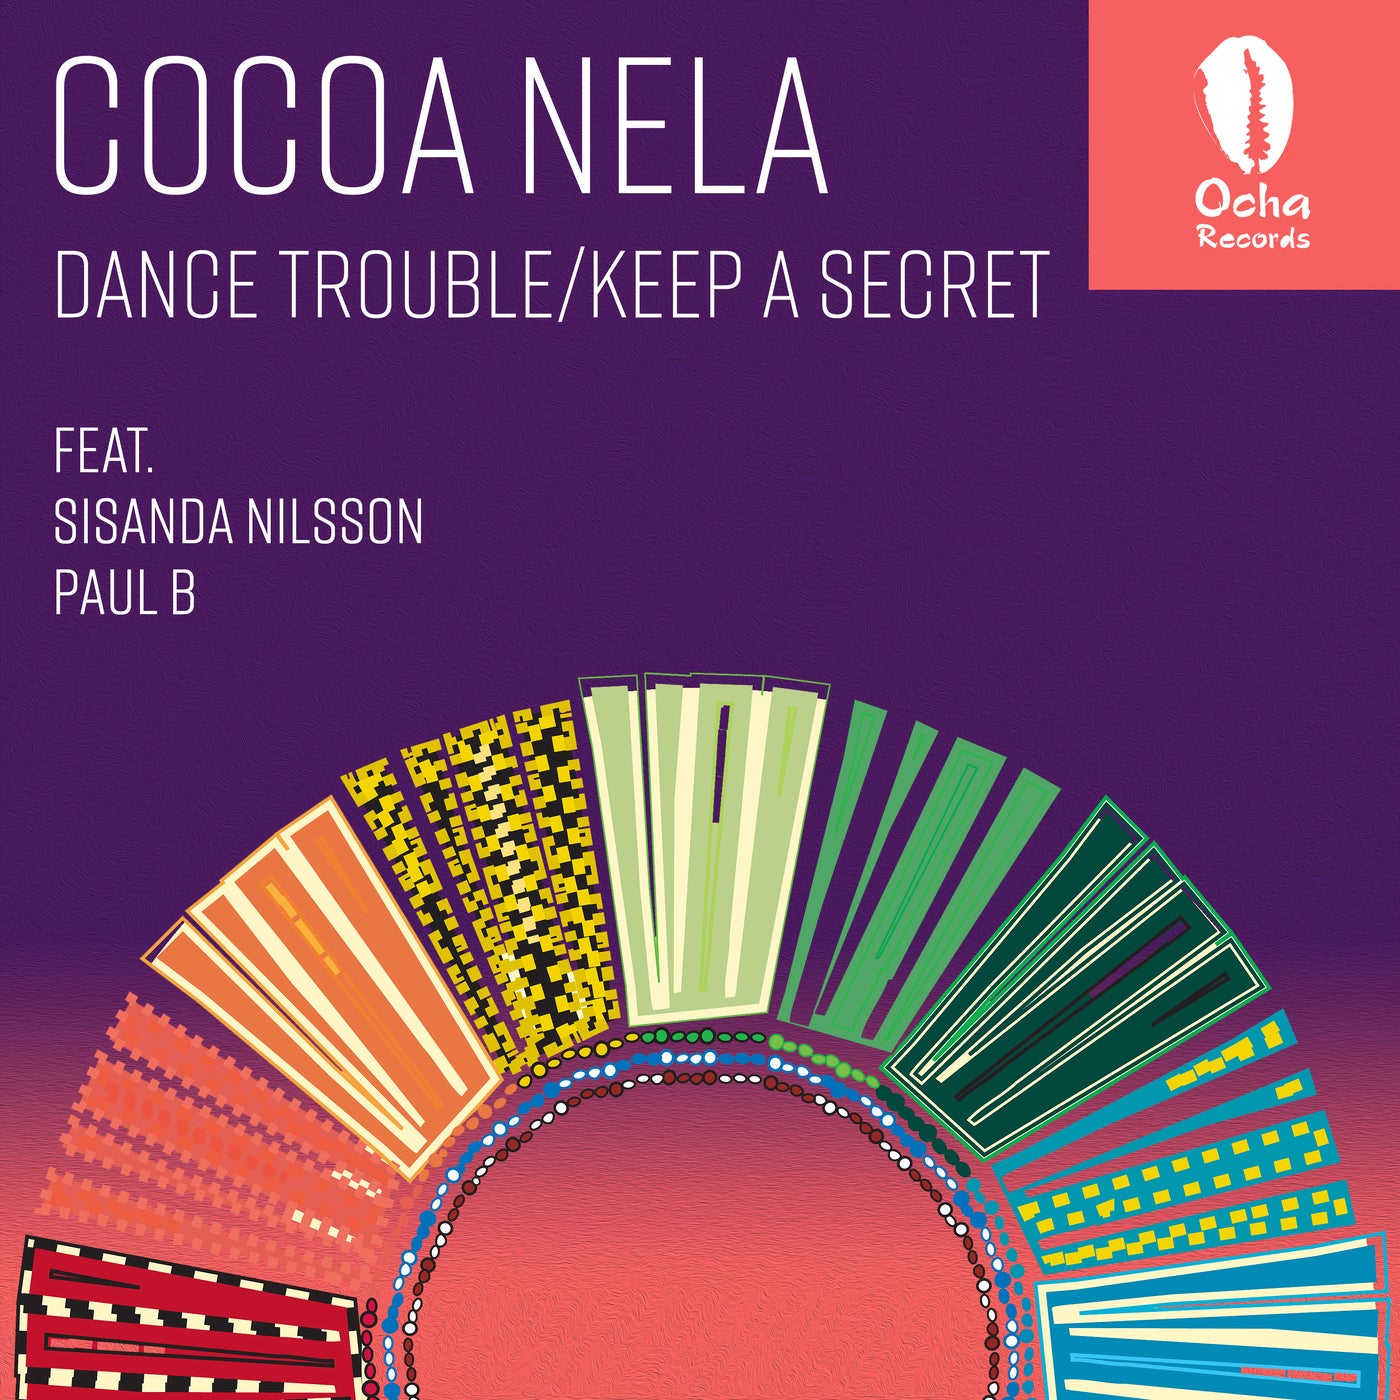 image cover: Cocoa Nela, Sisanda Nilsson, Paul B - Dance Trouble / Keep A Secret / OCH162